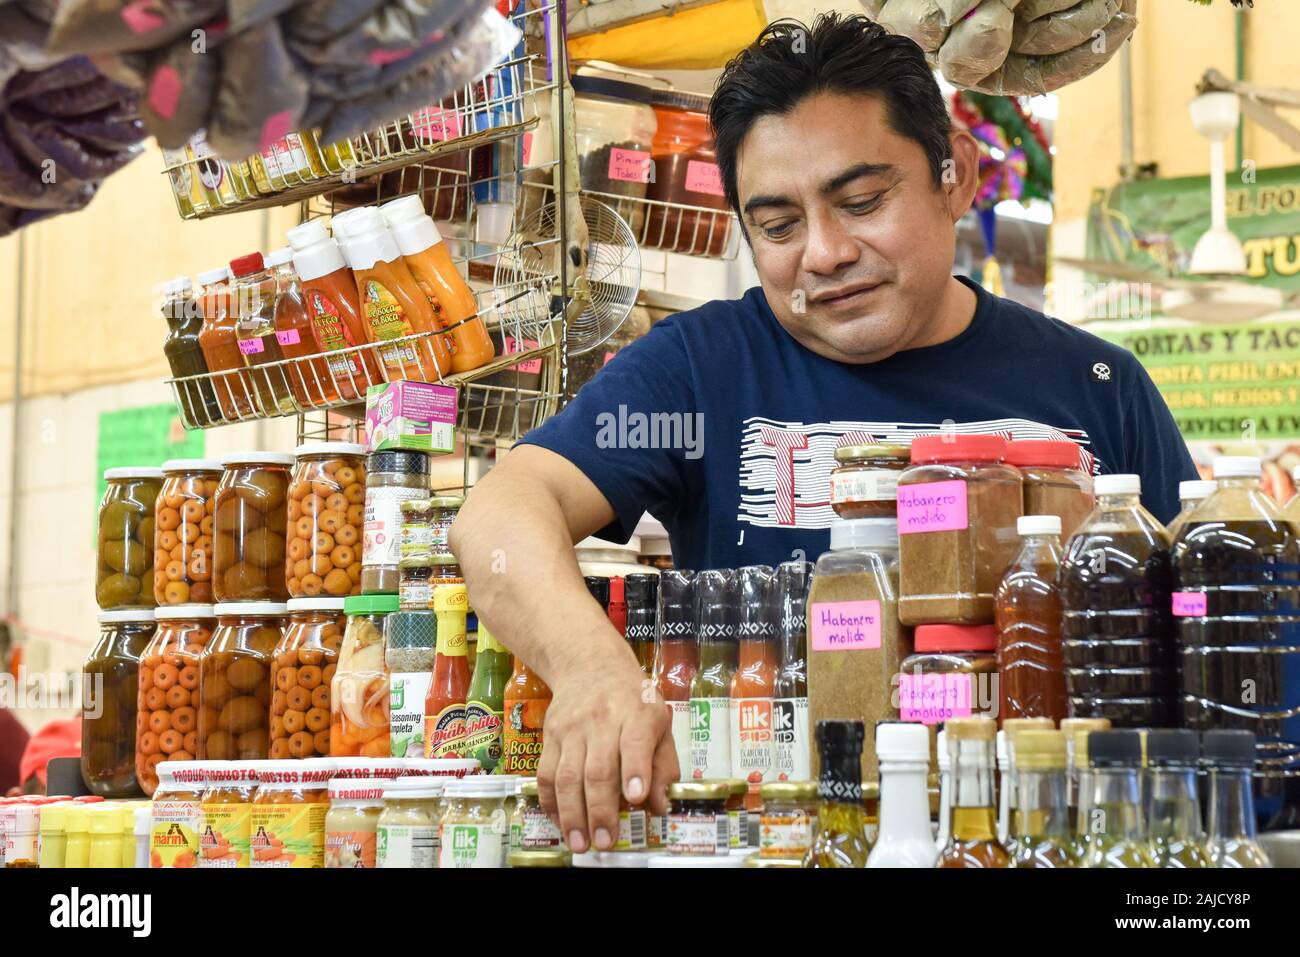 Food stand, Lucas Galvez Municipal Market, Merida, Mexico Stock Photo